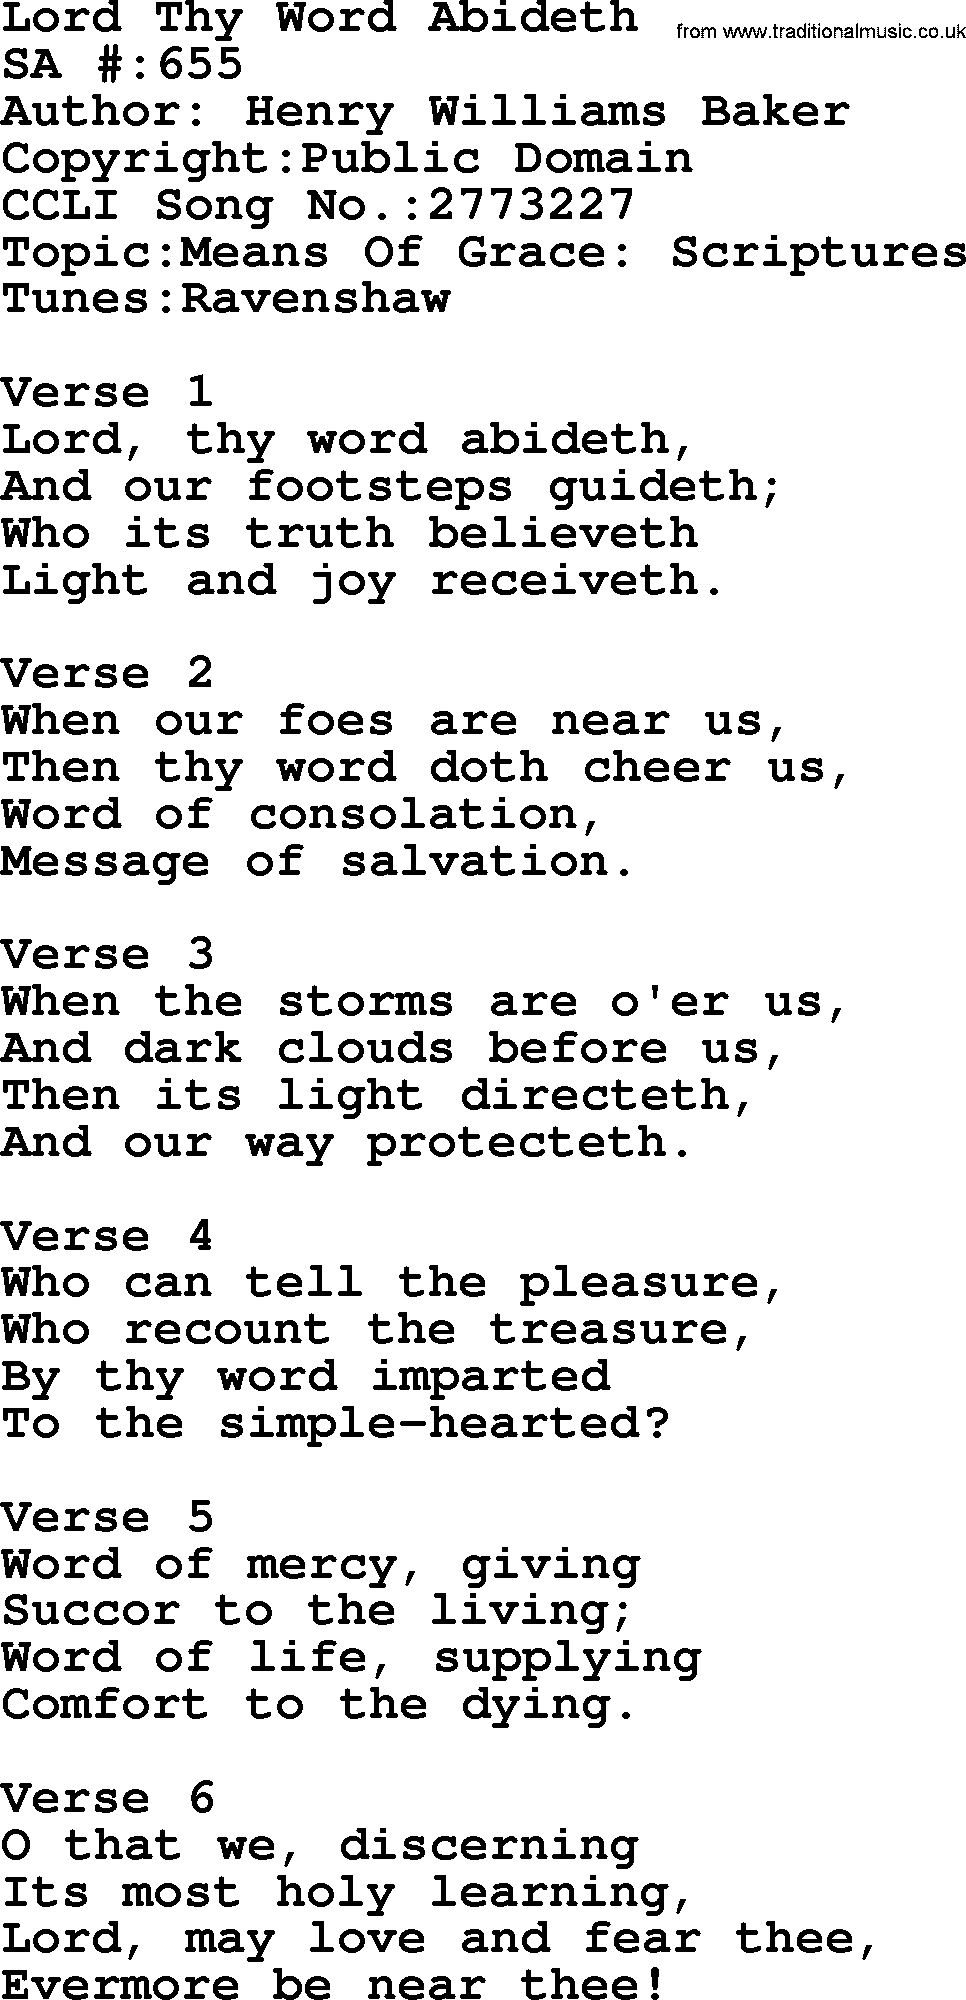 Salvation Army Hymnal, title: Lord Thy Word Abideth, with lyrics and PDF,